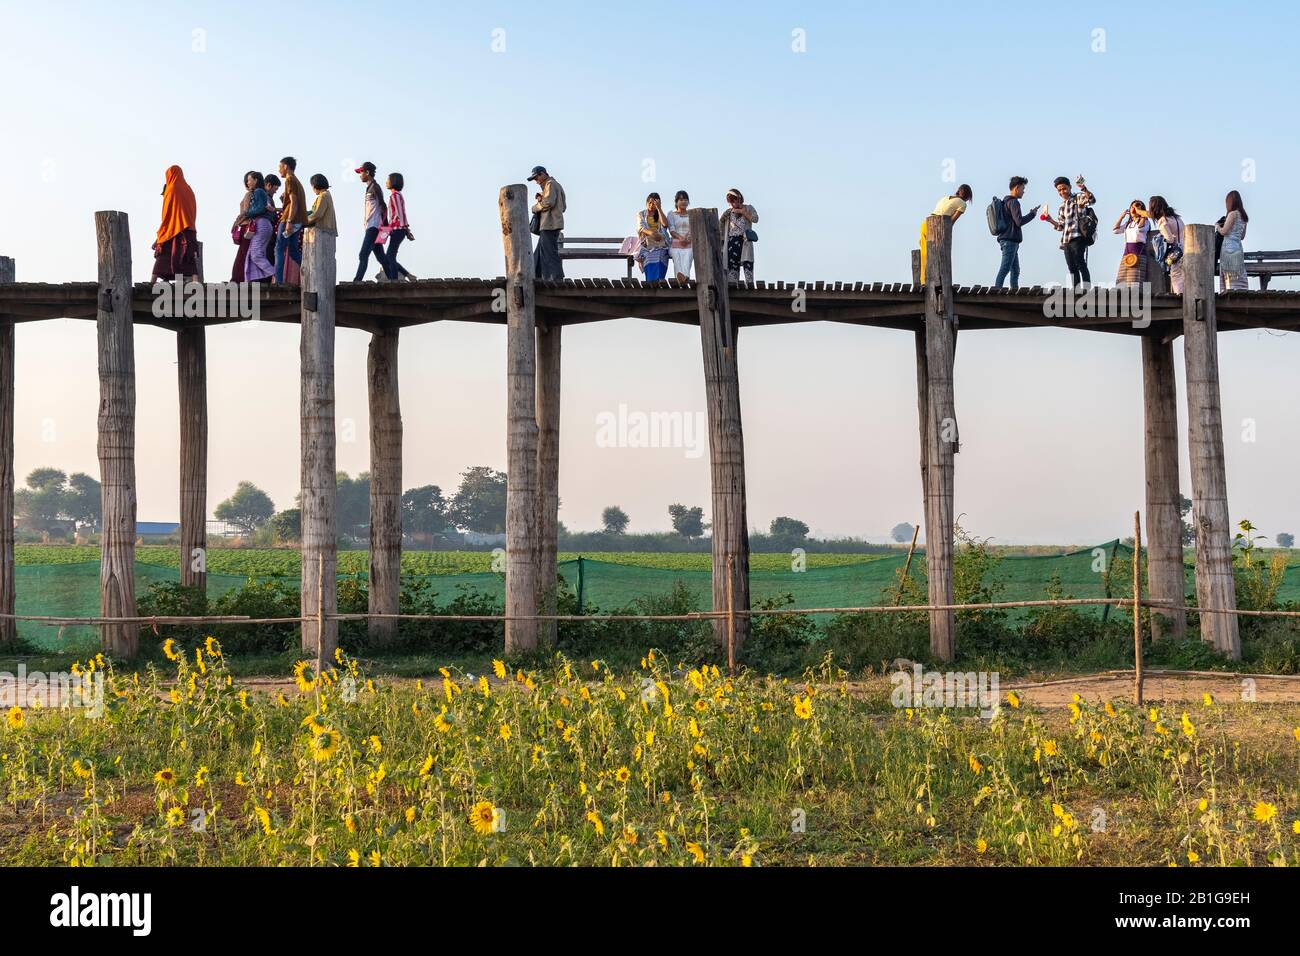 U Bein-Brücke bei Sonnenaufgang, Taung Tha Man Lake, Amarapura, Mandalay Region, Myanmar Stockfoto